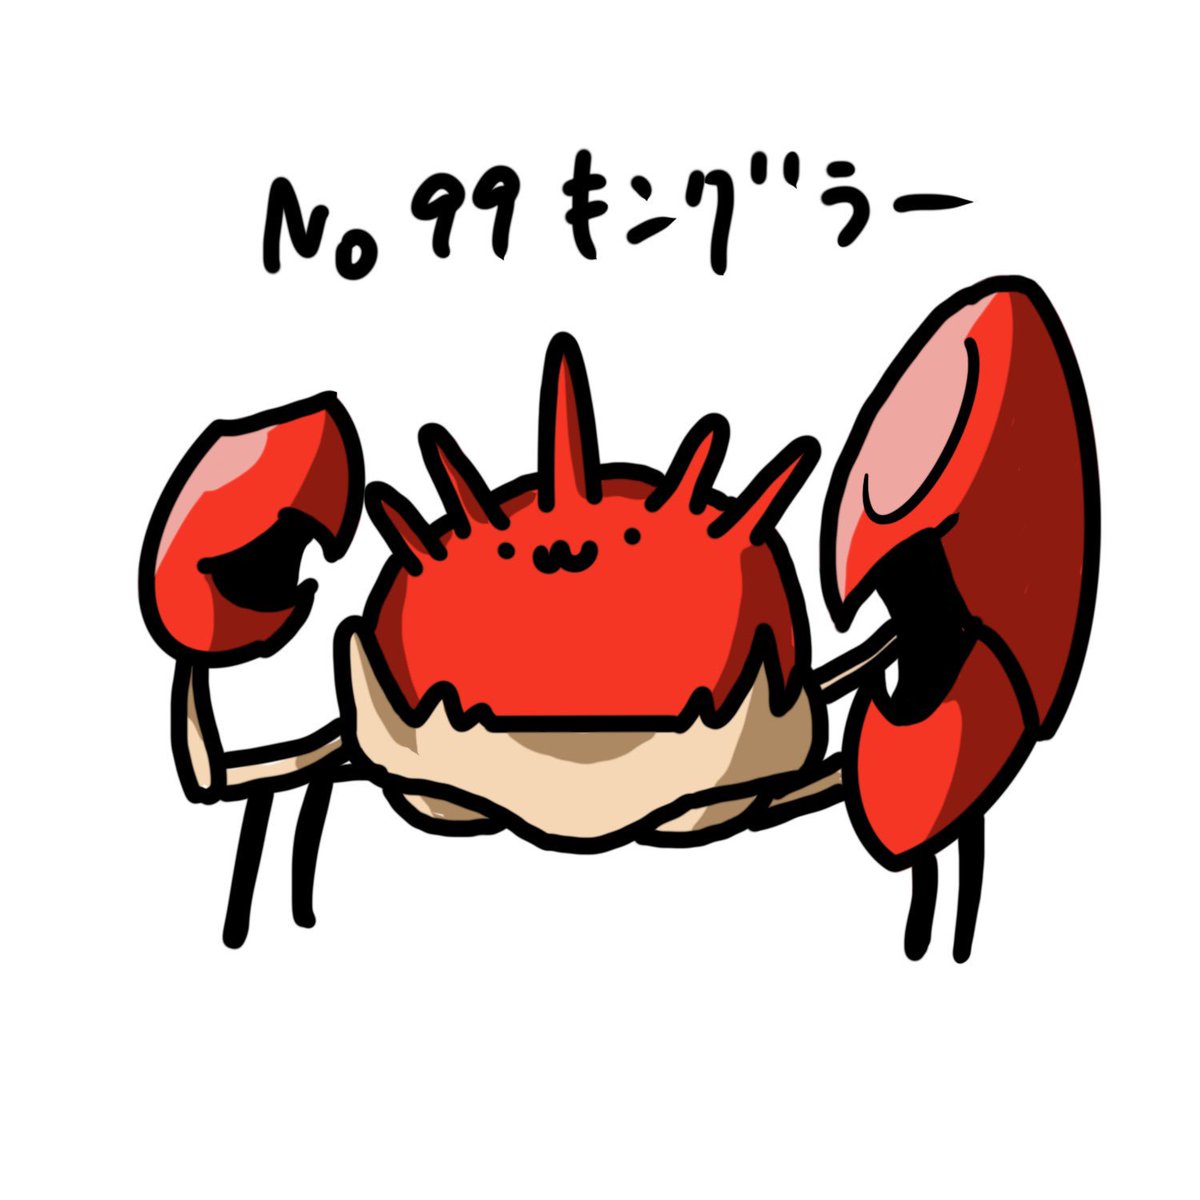 Gai ﾄﾗｲﾊﾞﾙﾃﾞｻﾞｲﾅｰ Crabhouse作った人 Pa Twitter カニ達 ポケモン